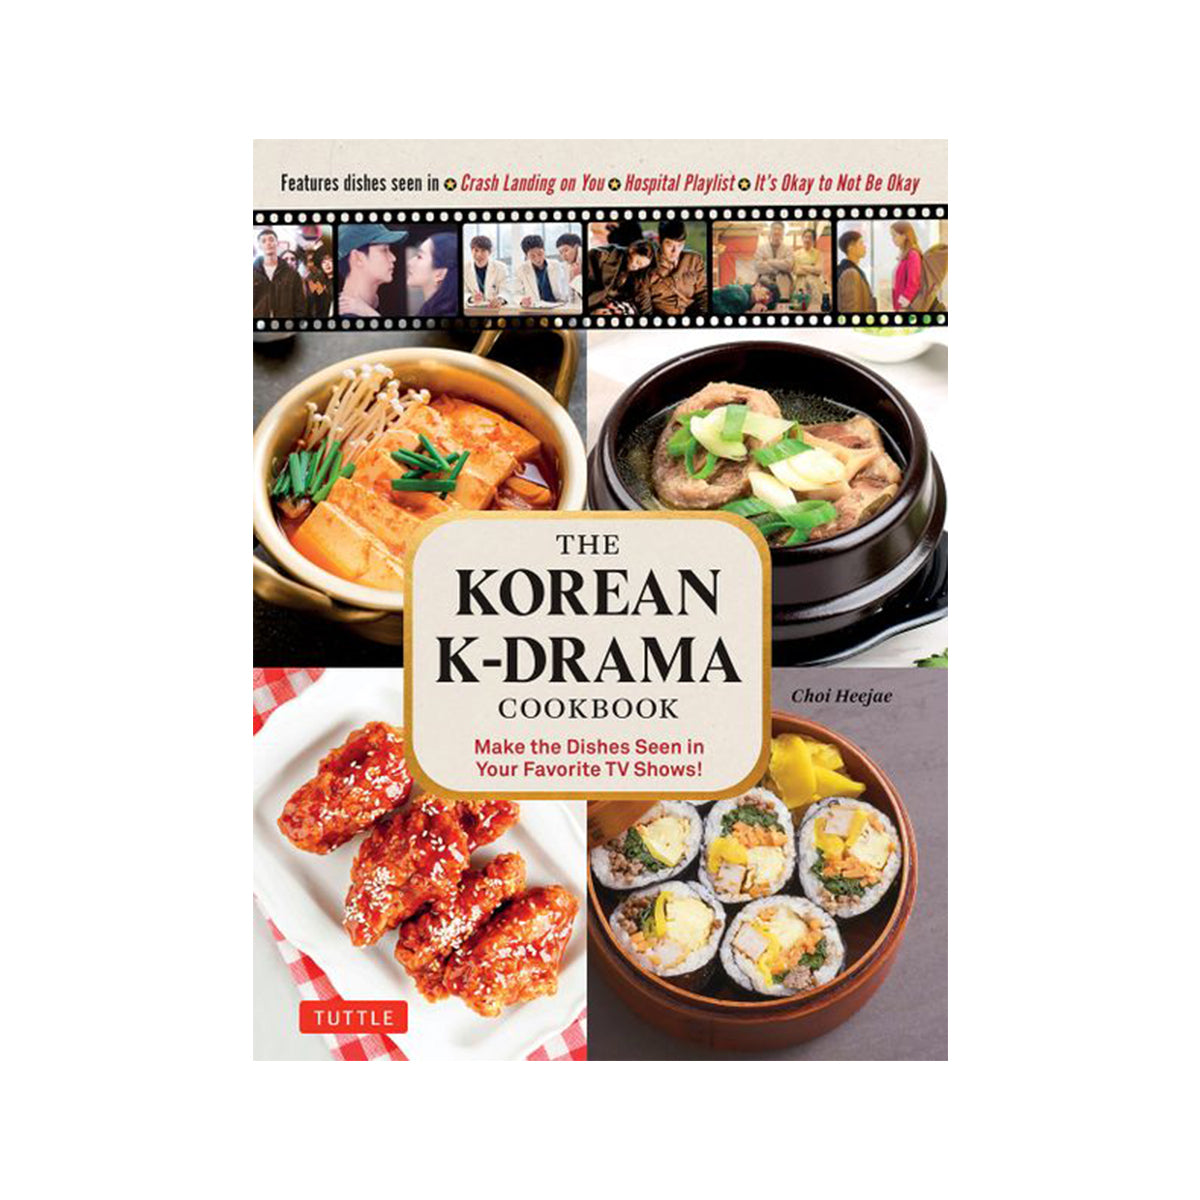 The Korean K-Drama Cookbook